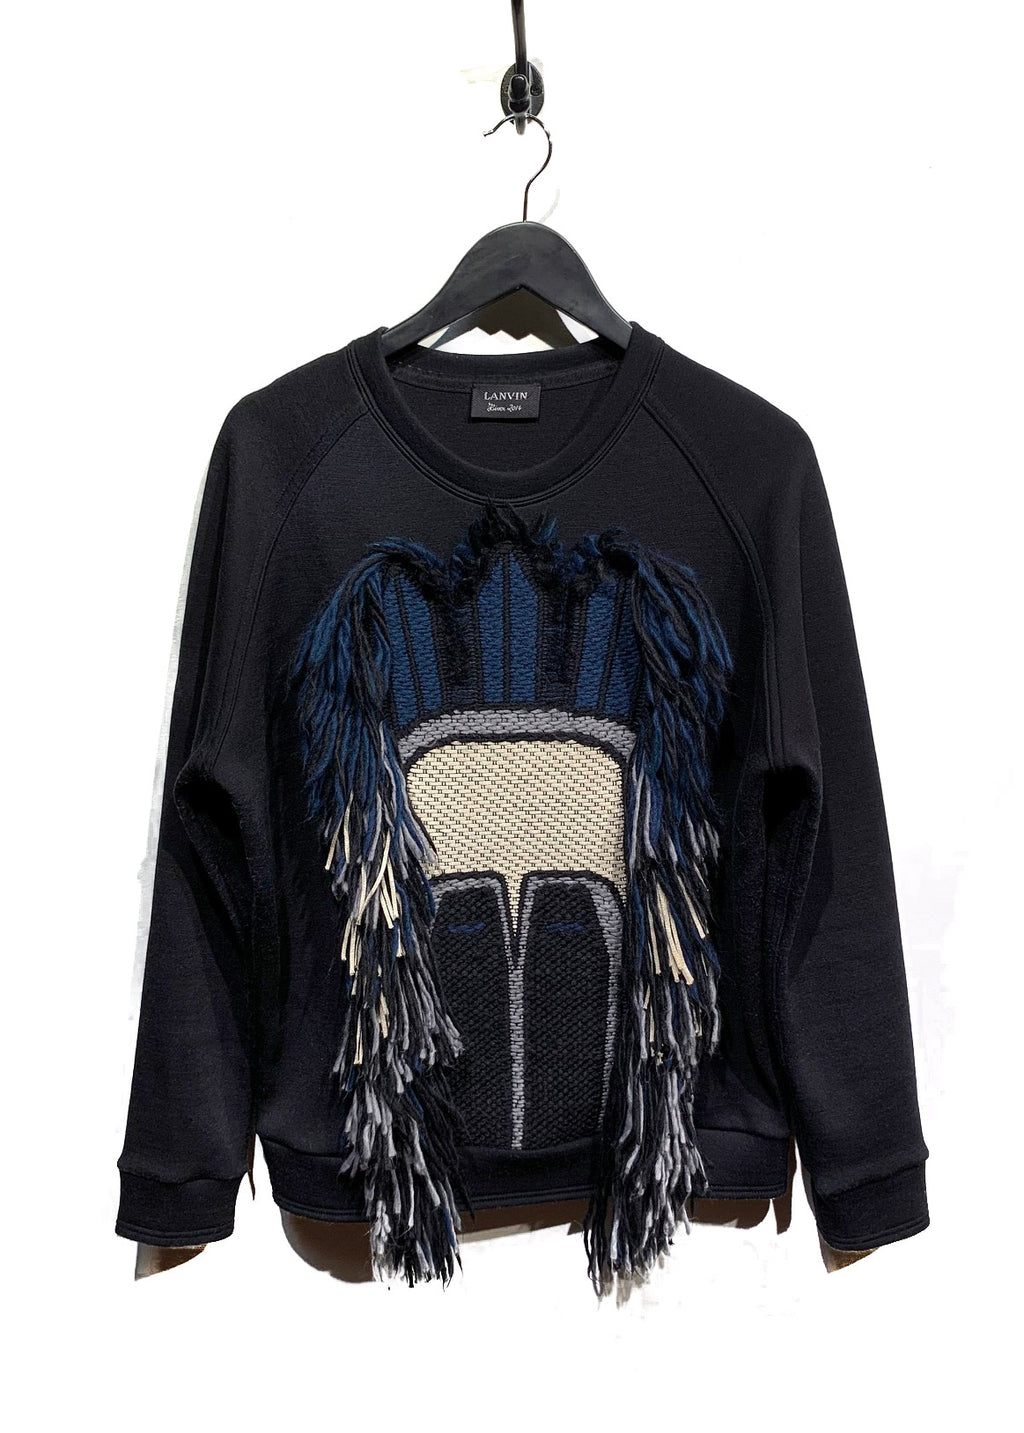 Lanvin Black Fringed Mask Embroidered Sweater